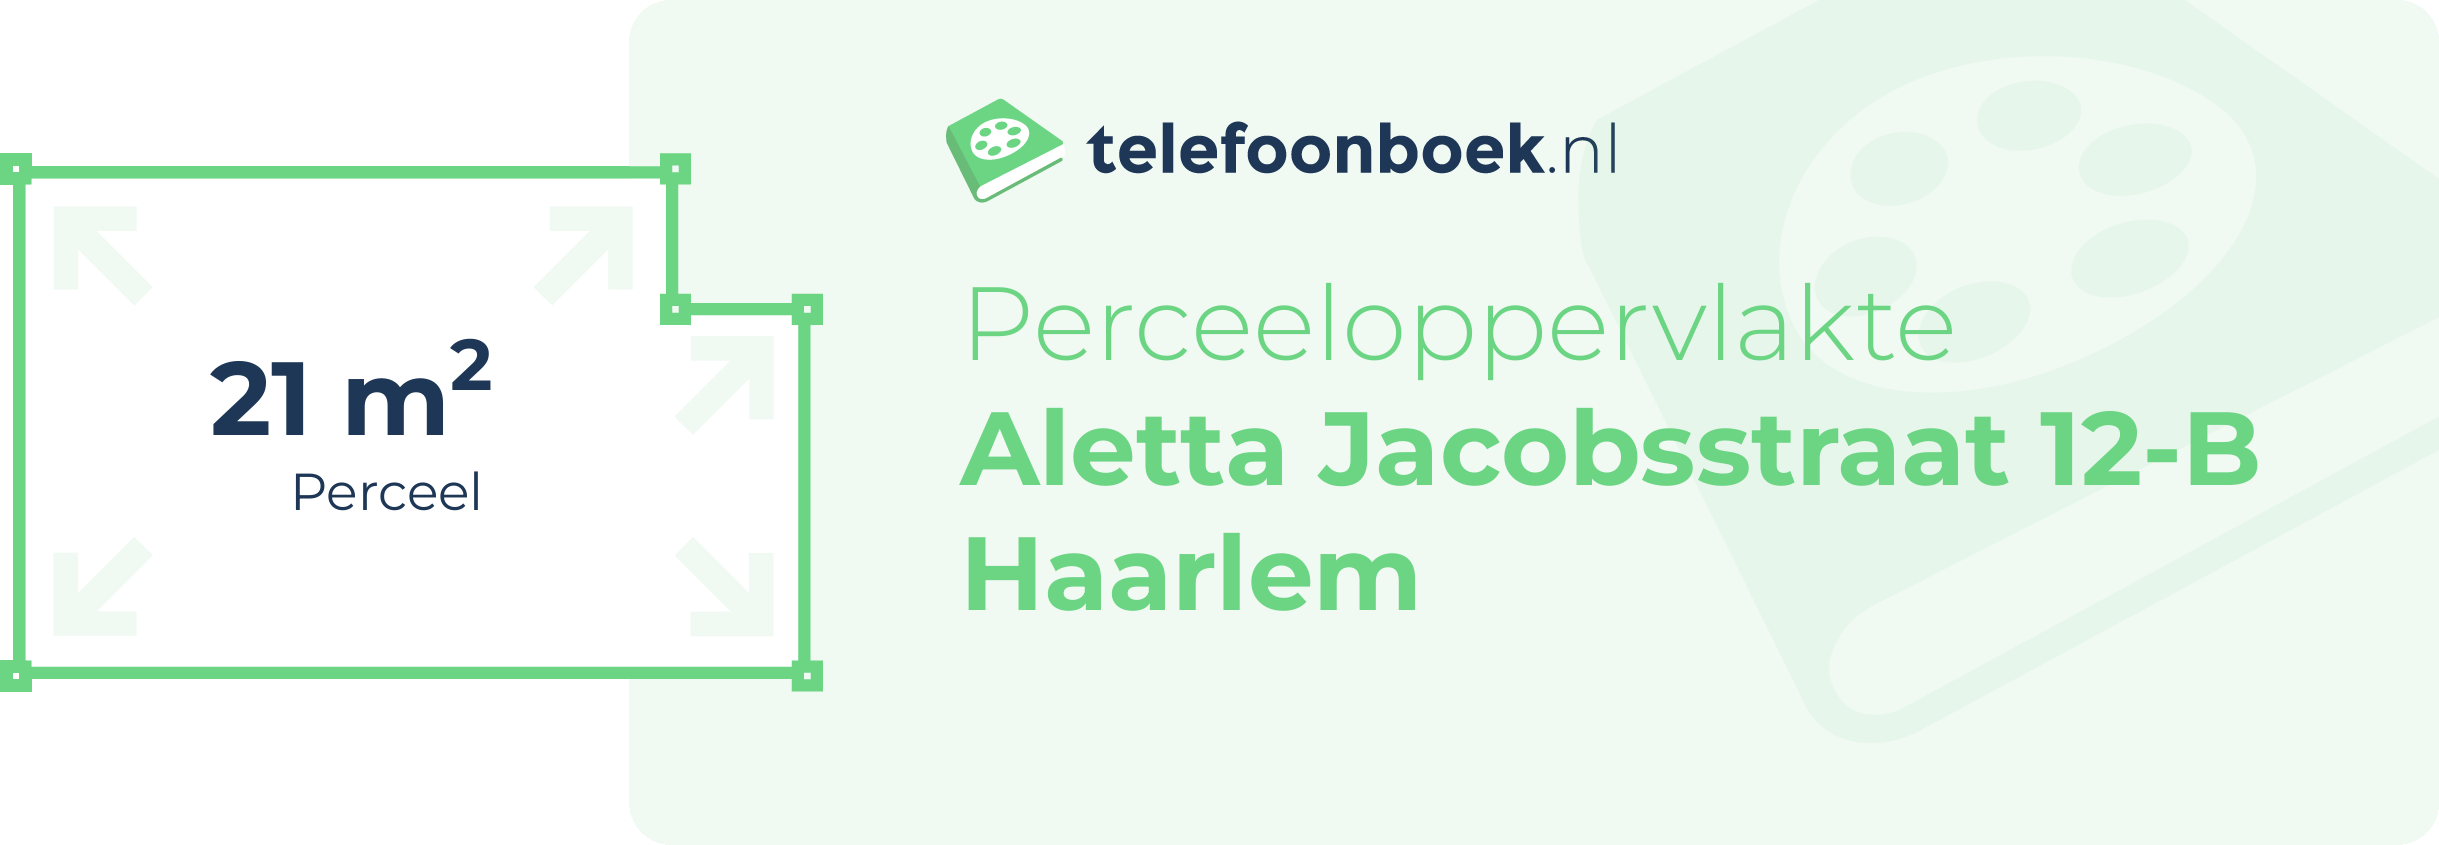 Perceeloppervlakte Aletta Jacobsstraat 12-B Haarlem